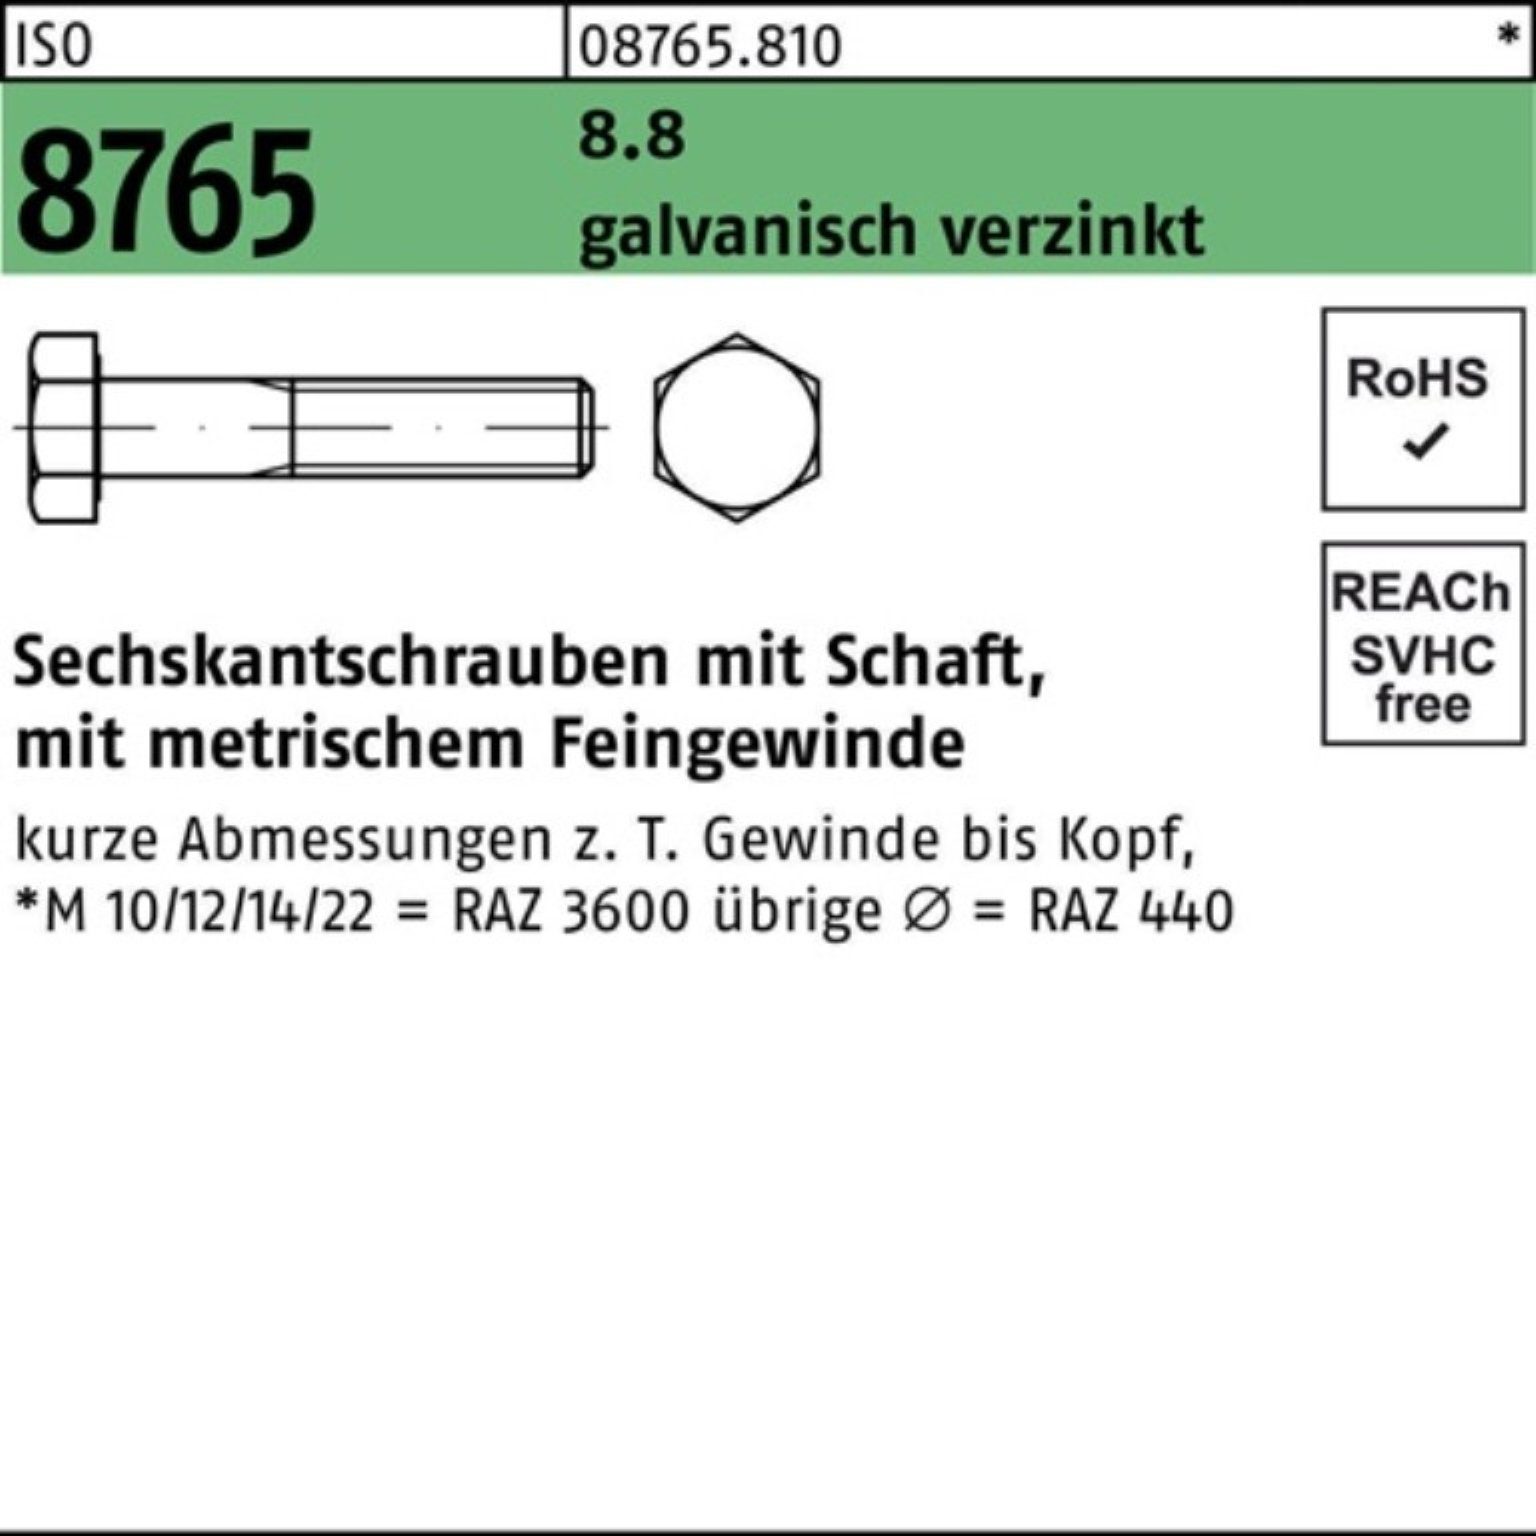 Reyher Sechskantschraube 100er Pack M12x1,5x120 8765 galv.verz 8.8 Schaft Sechskantschraube ISO